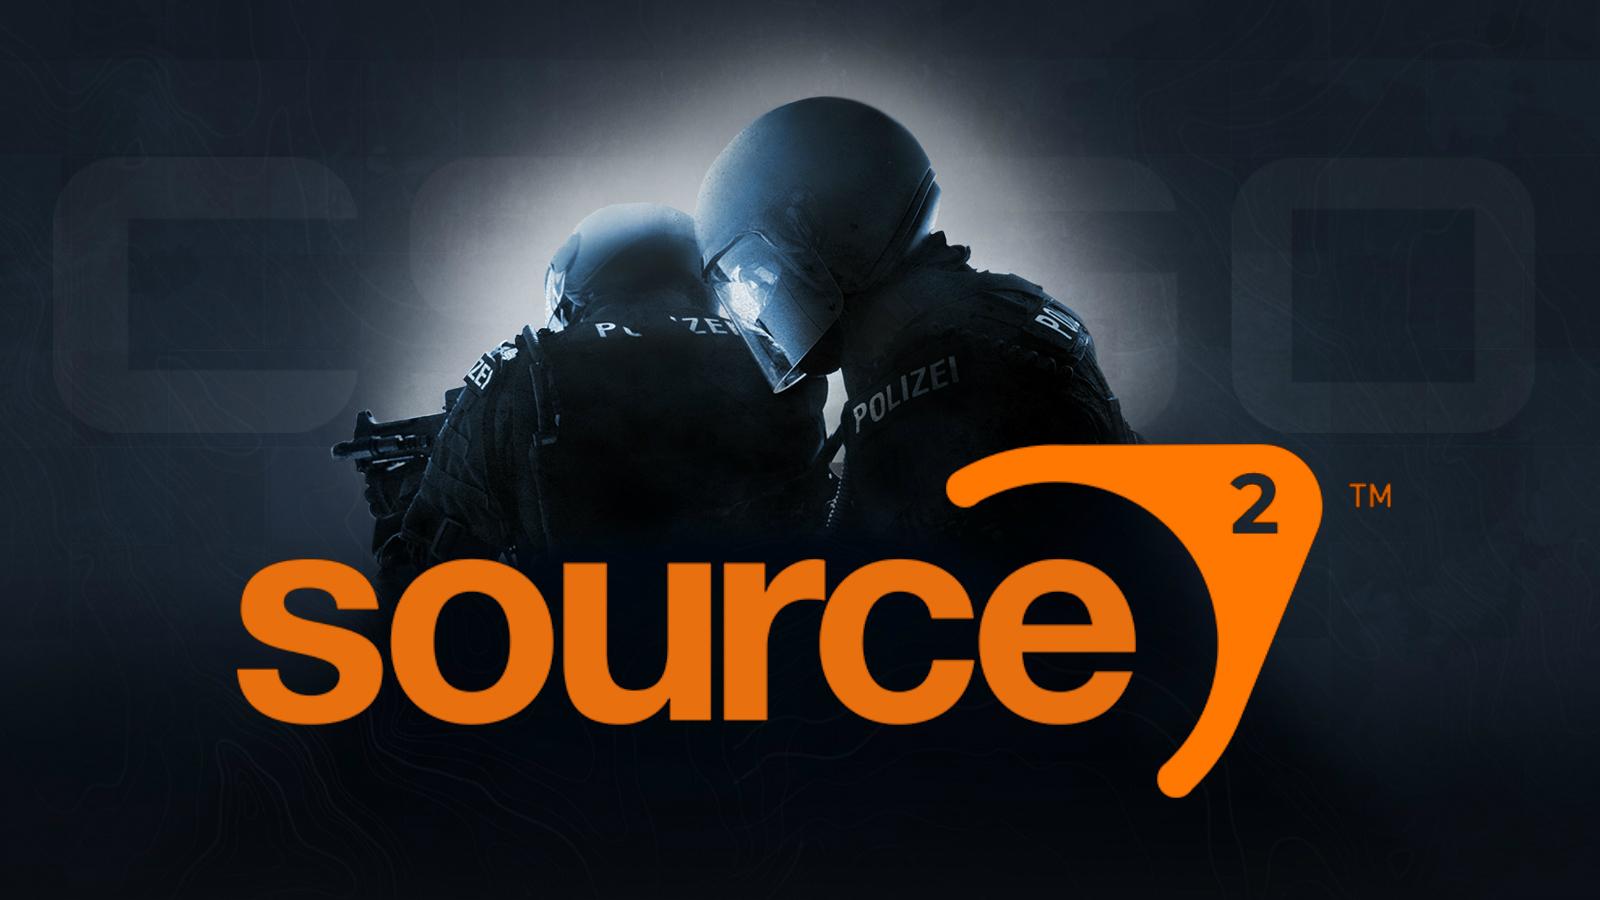 CSGO with Source 2 logo